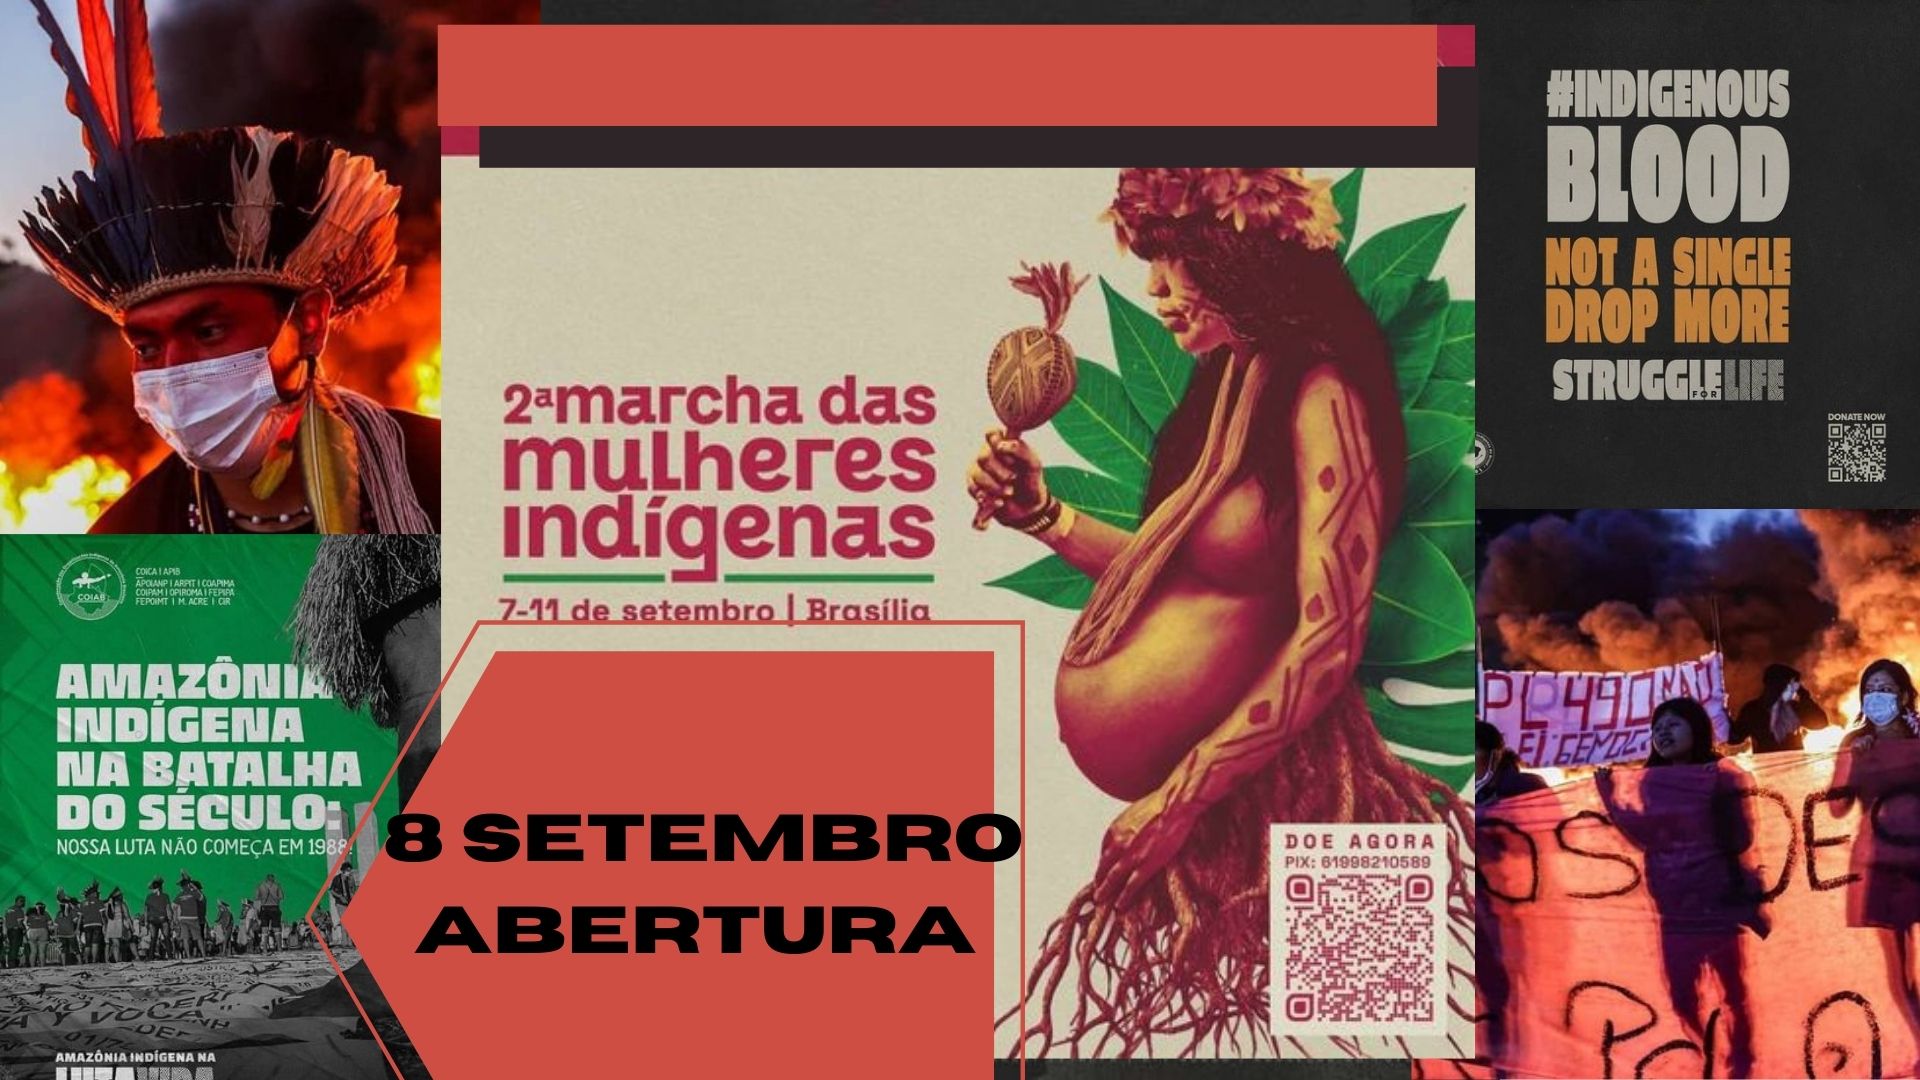 8 setembro abertura marcha mulheres indigenas